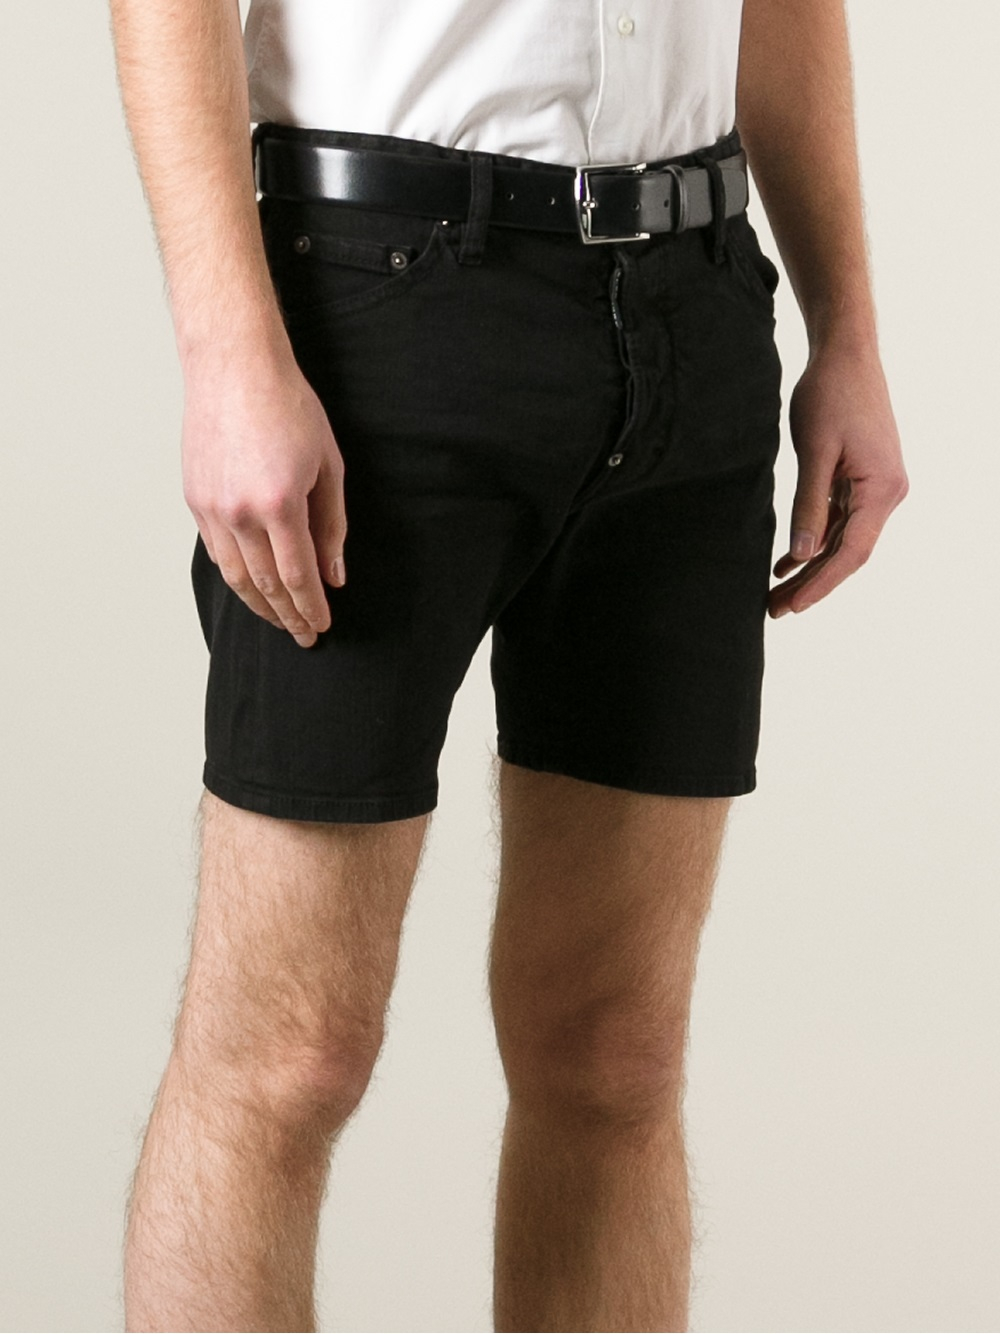 Lyst - DSquared² Denim Shorts in Black for Men